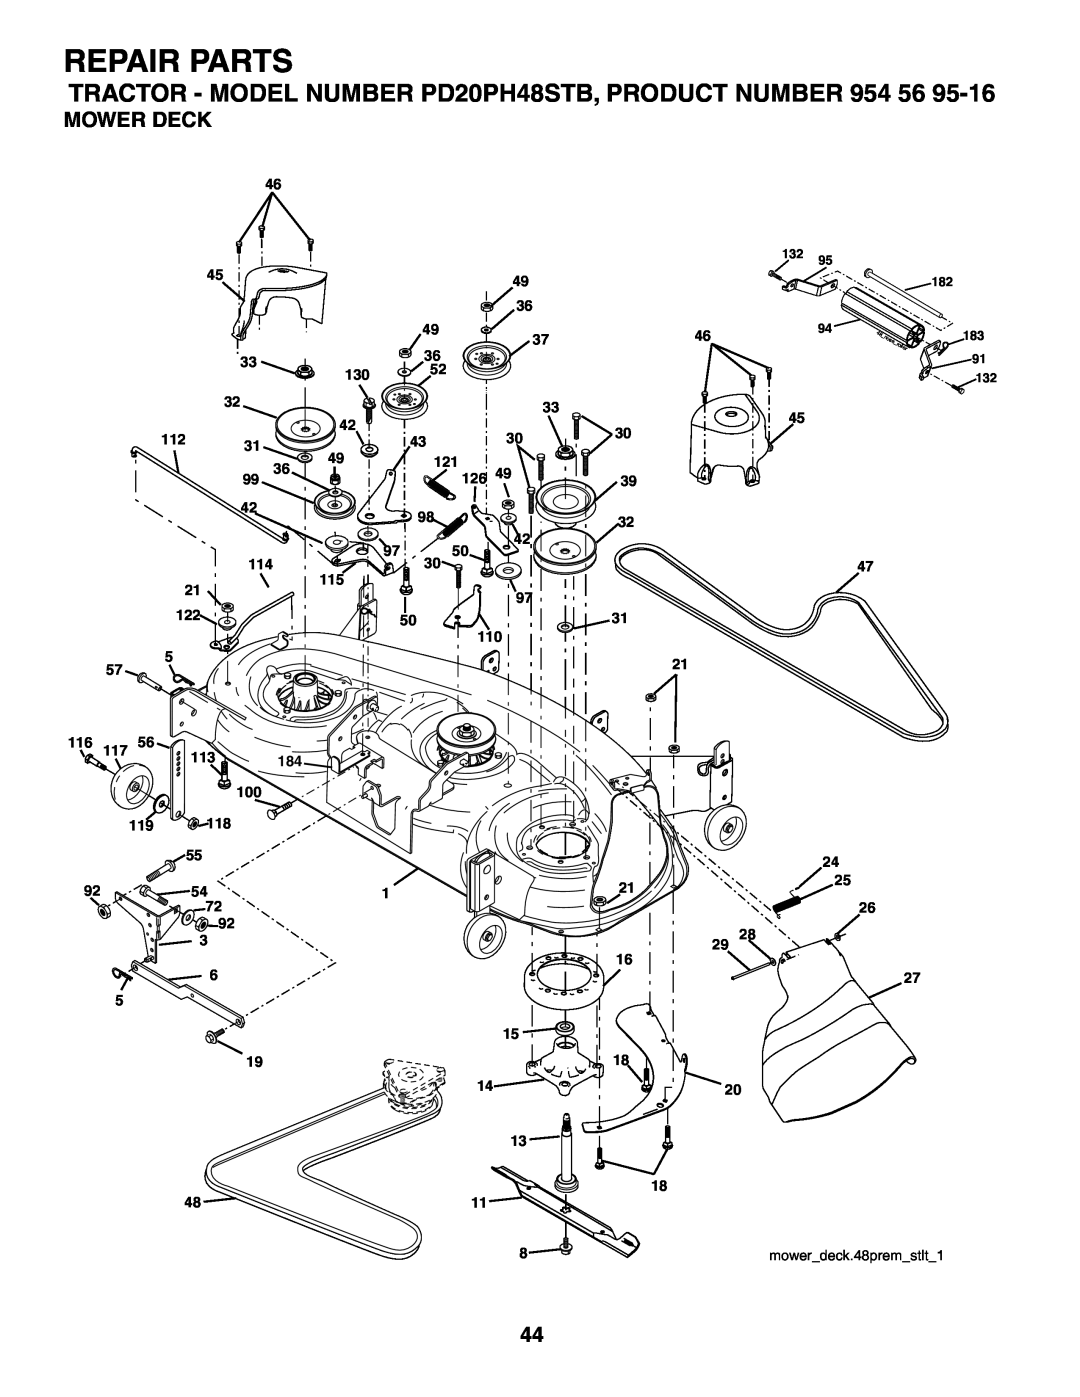 Poulan Mower Deck, Repair Parts, TRACTOR - MODEL NUMBER PD20PH48STB, PRODUCT NUMBER 954 56, mowerdeck.48premstlt1 